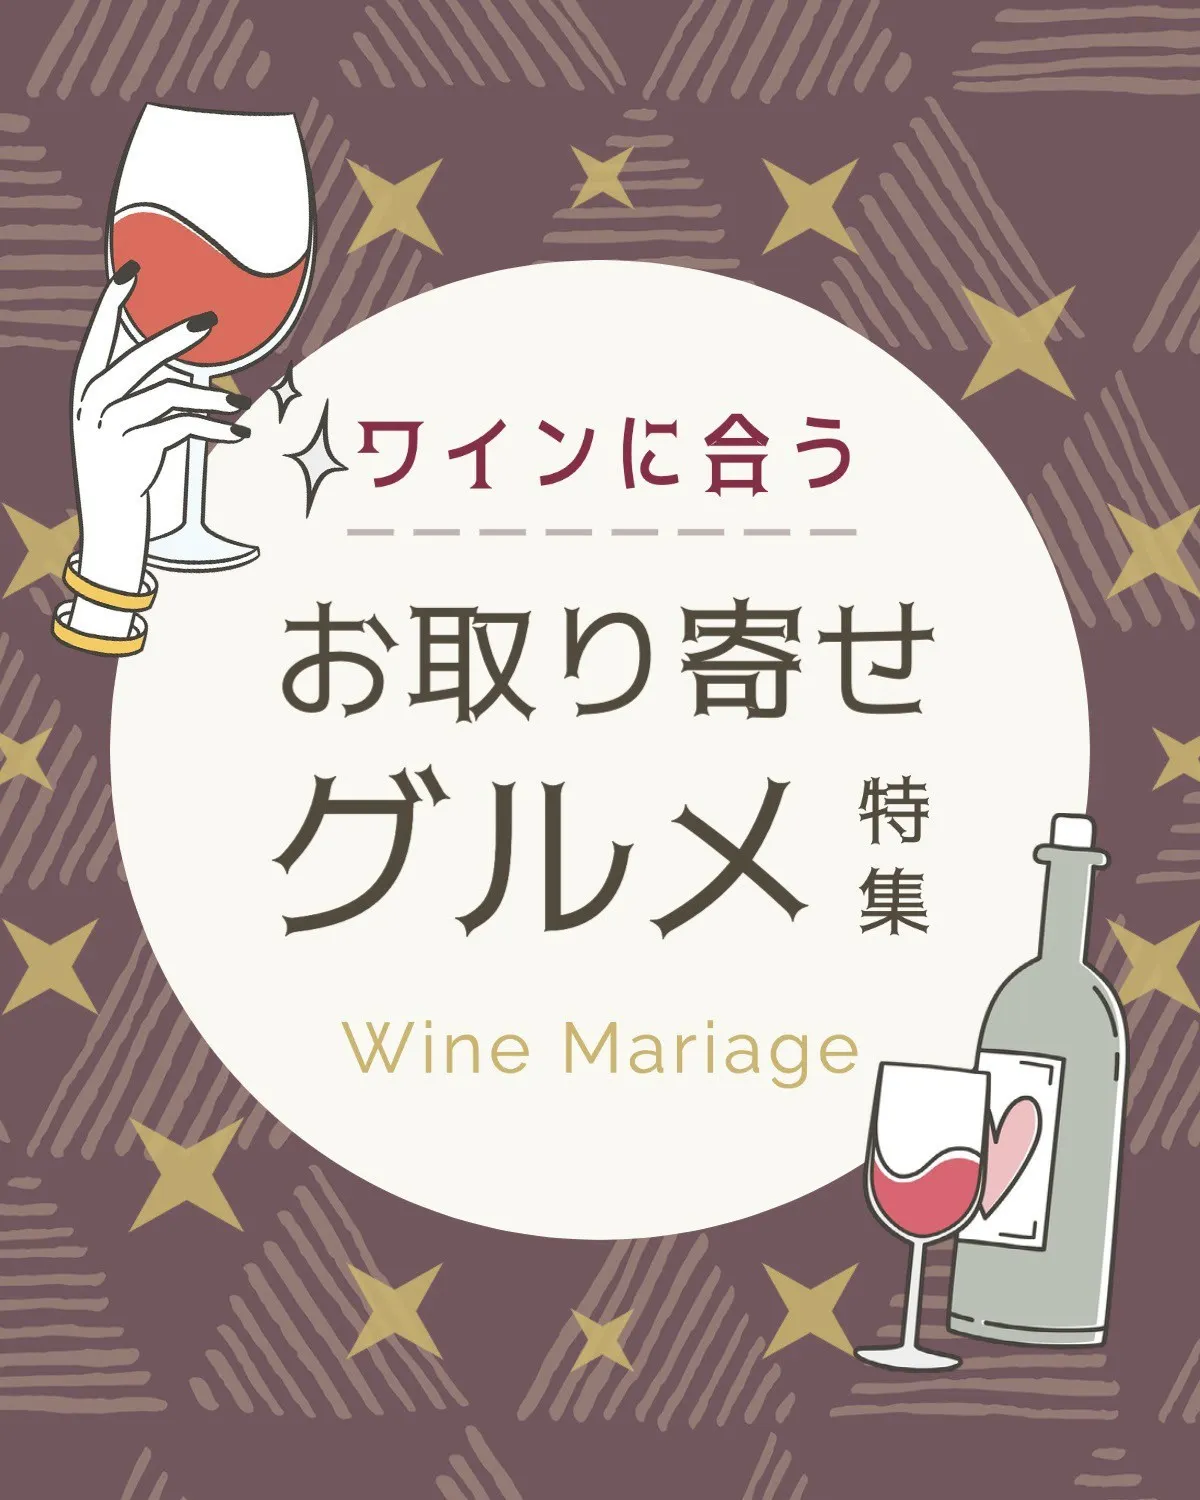 Wine mariage gourmet instagram portrait post